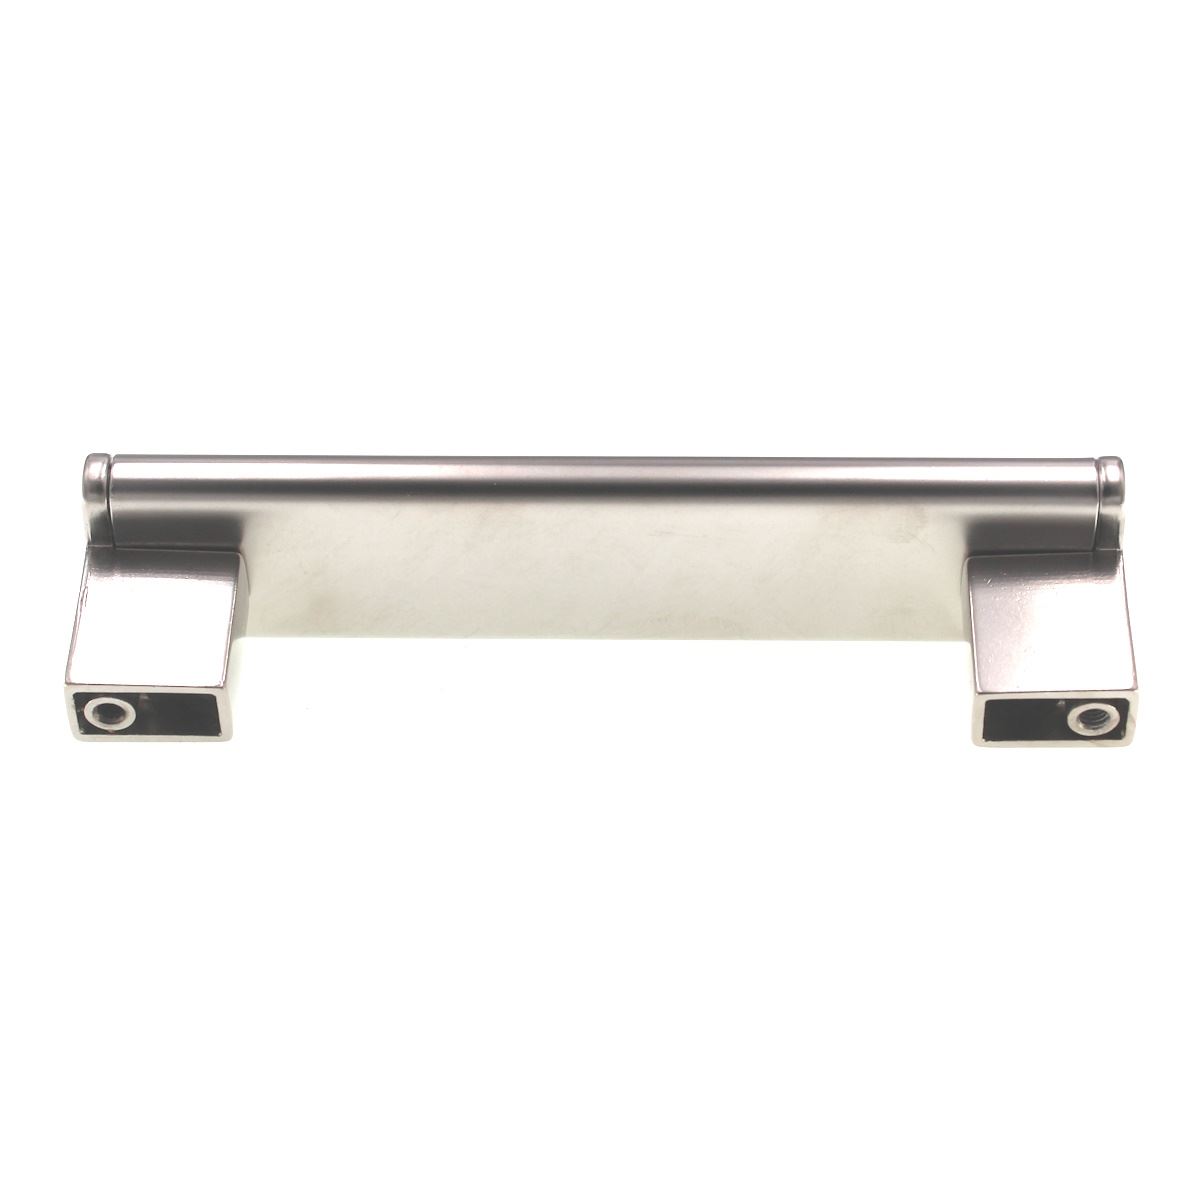 Schaub And Company Tenor Cabinet Bar Pull 5" (128mm) Ctr Satin Nickel 245-128-15